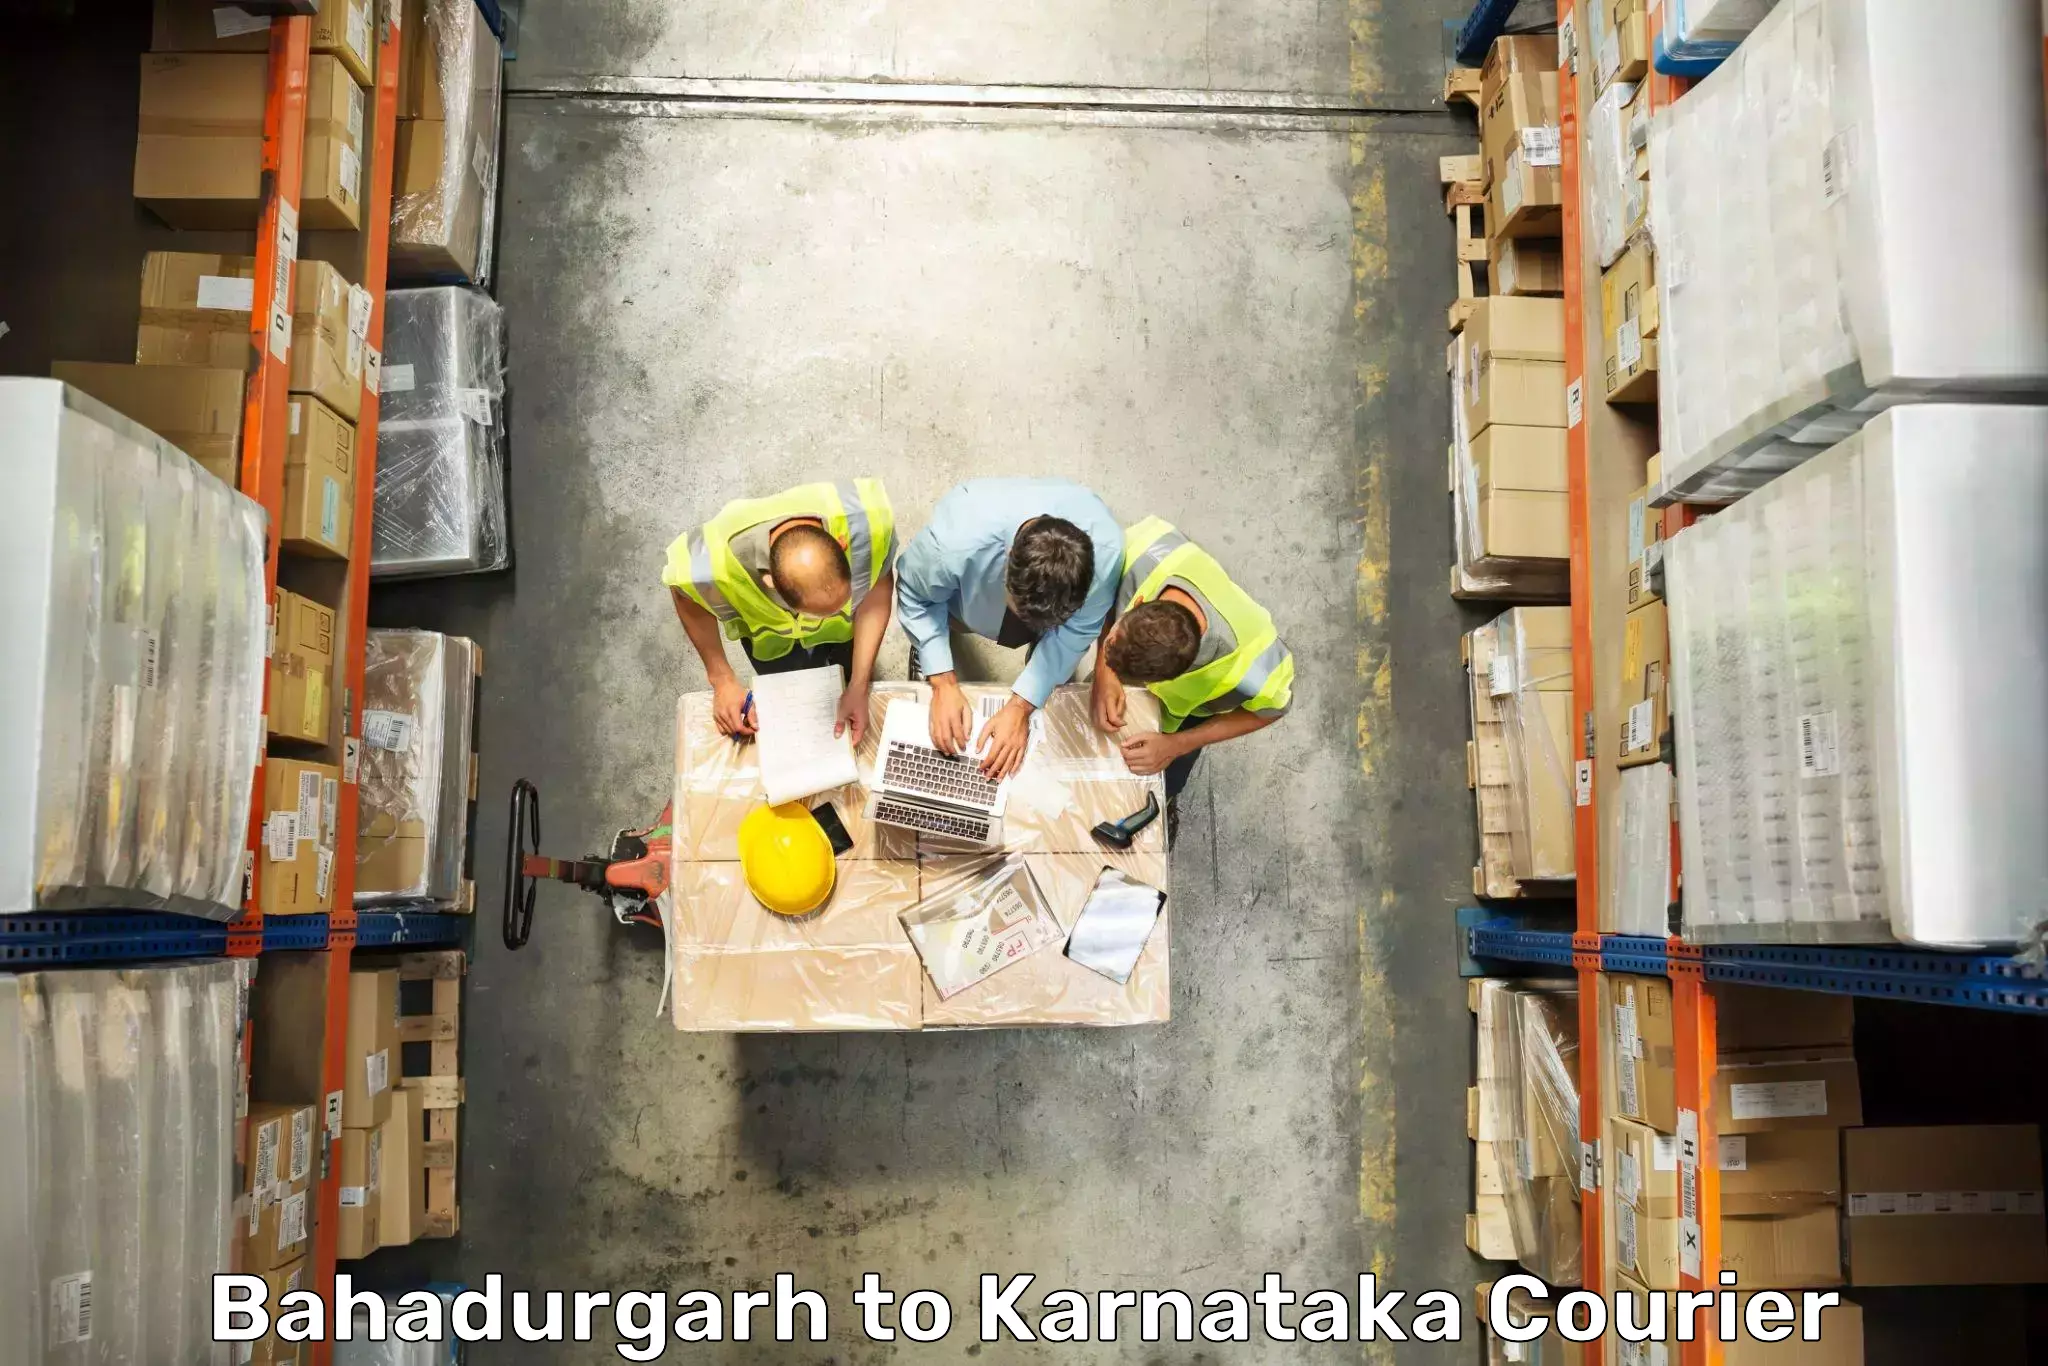 Luggage shipment specialists Bahadurgarh to Karnataka